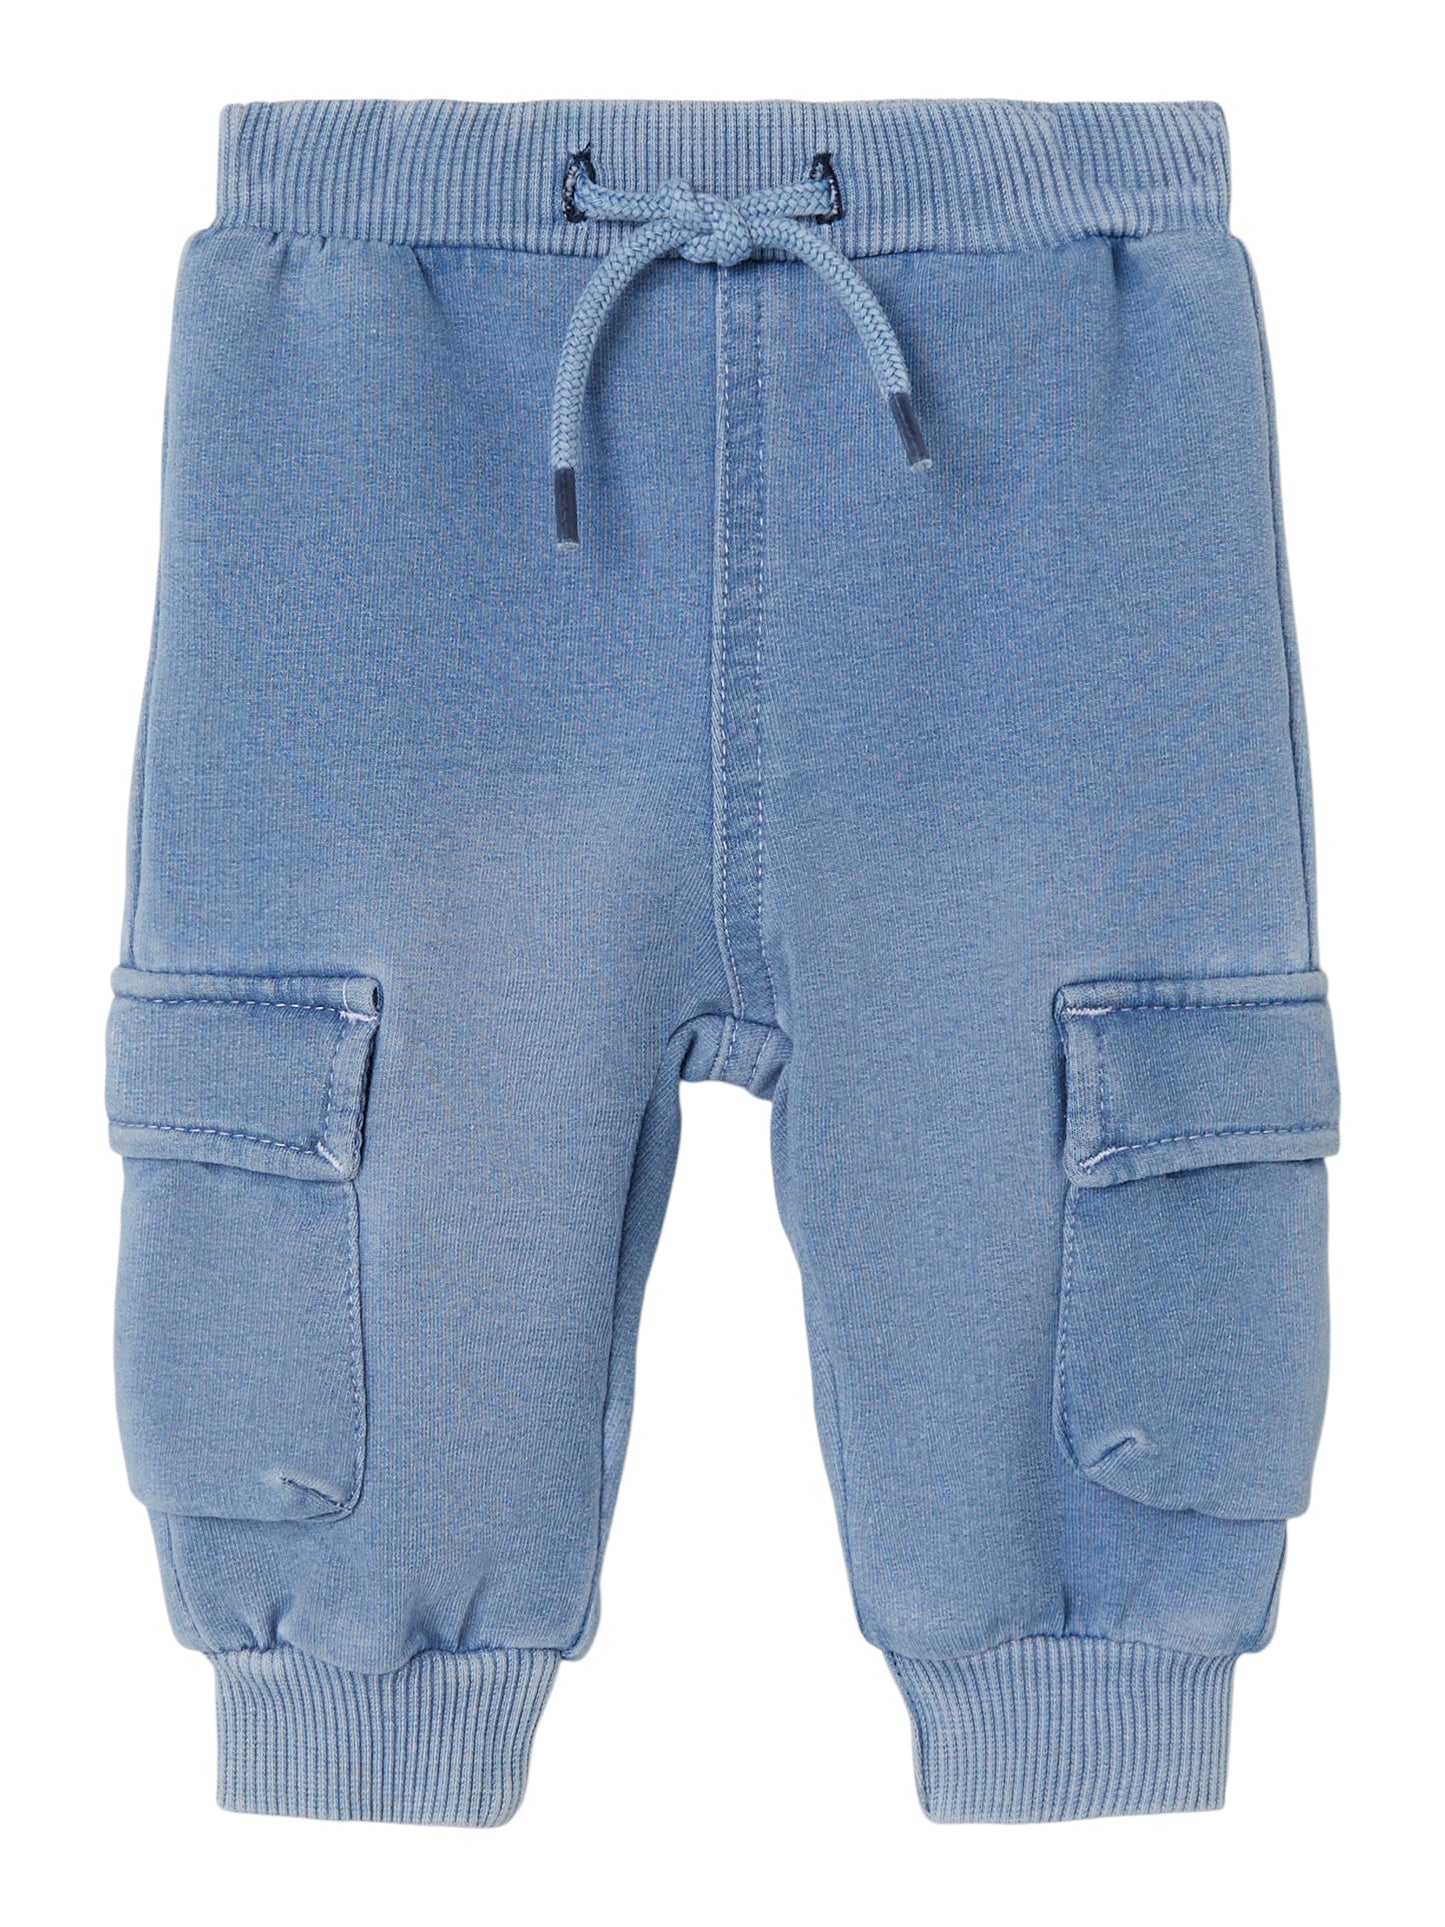 Name it - cargo jeans - light blue denim